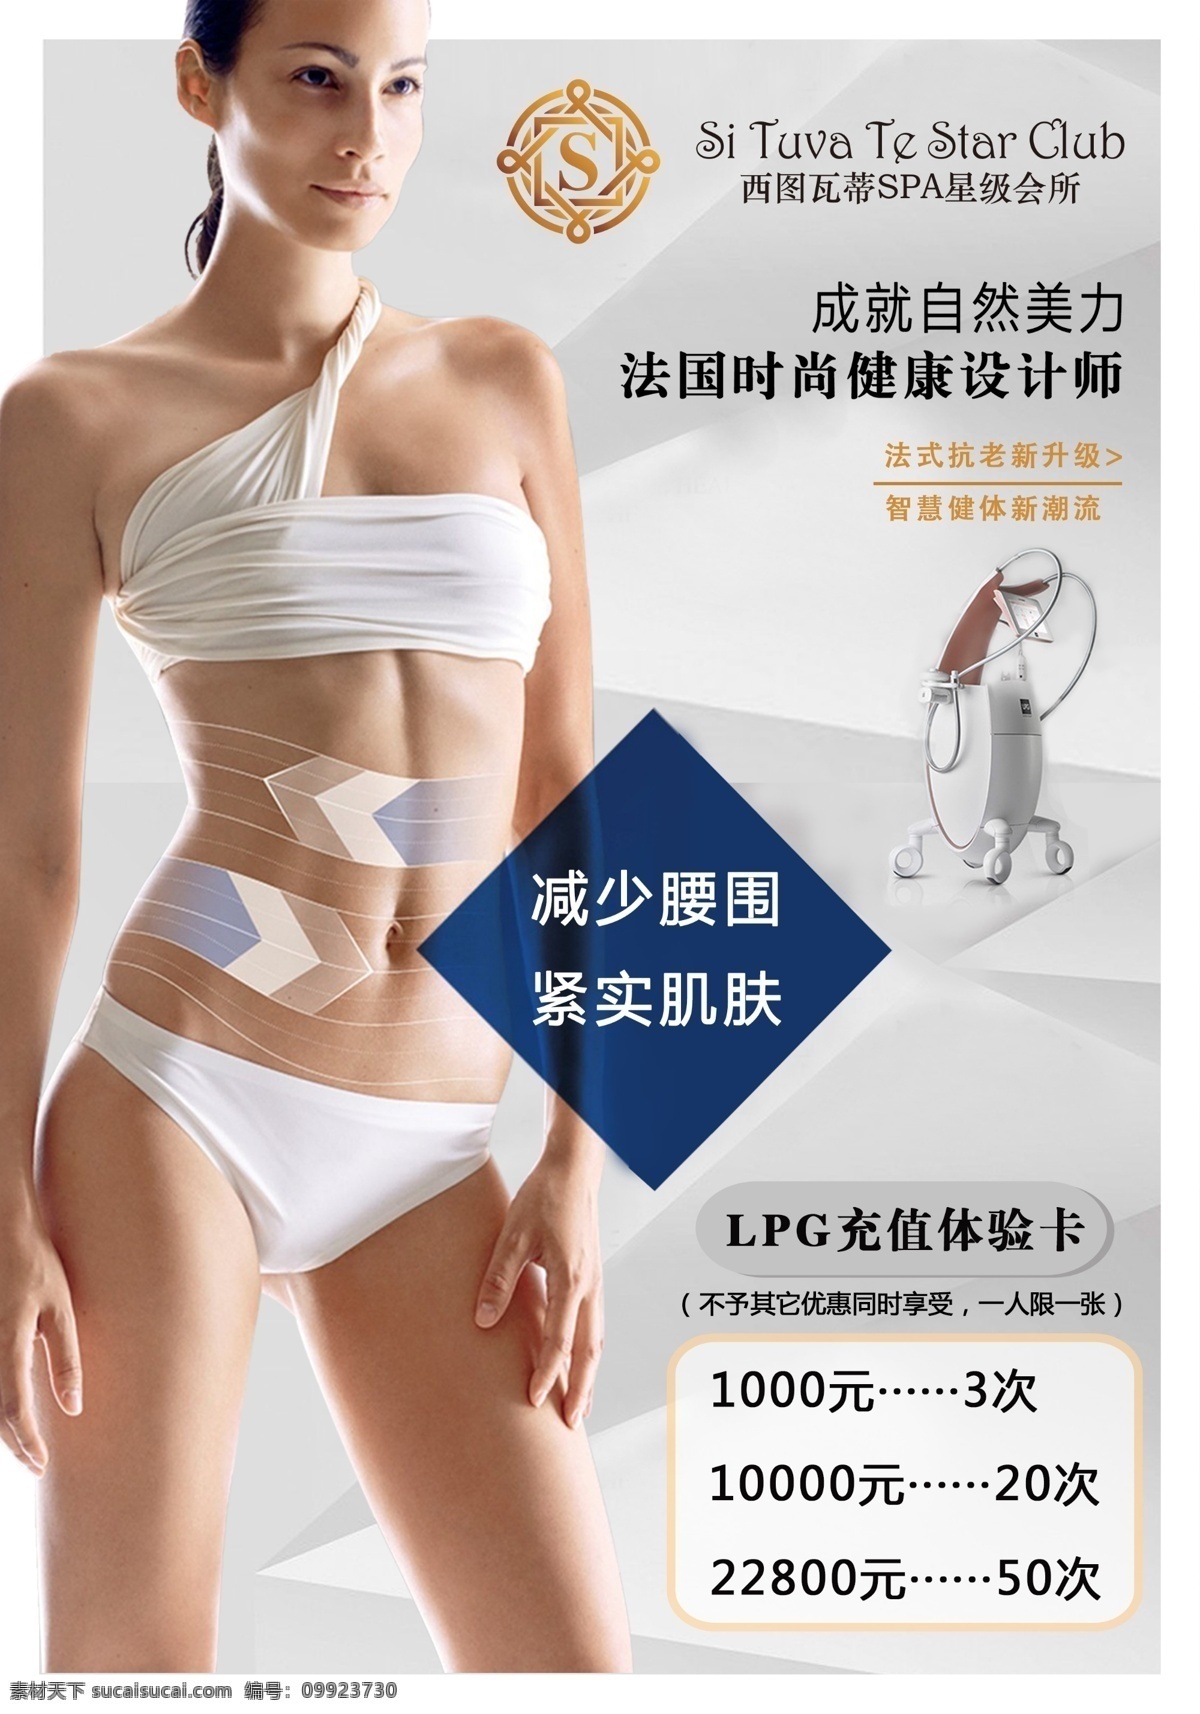 lpg 美体 塑形 spa 护肤造型 健身 运动海报 减肥瘦腰 美体塑形 海报易拉宝